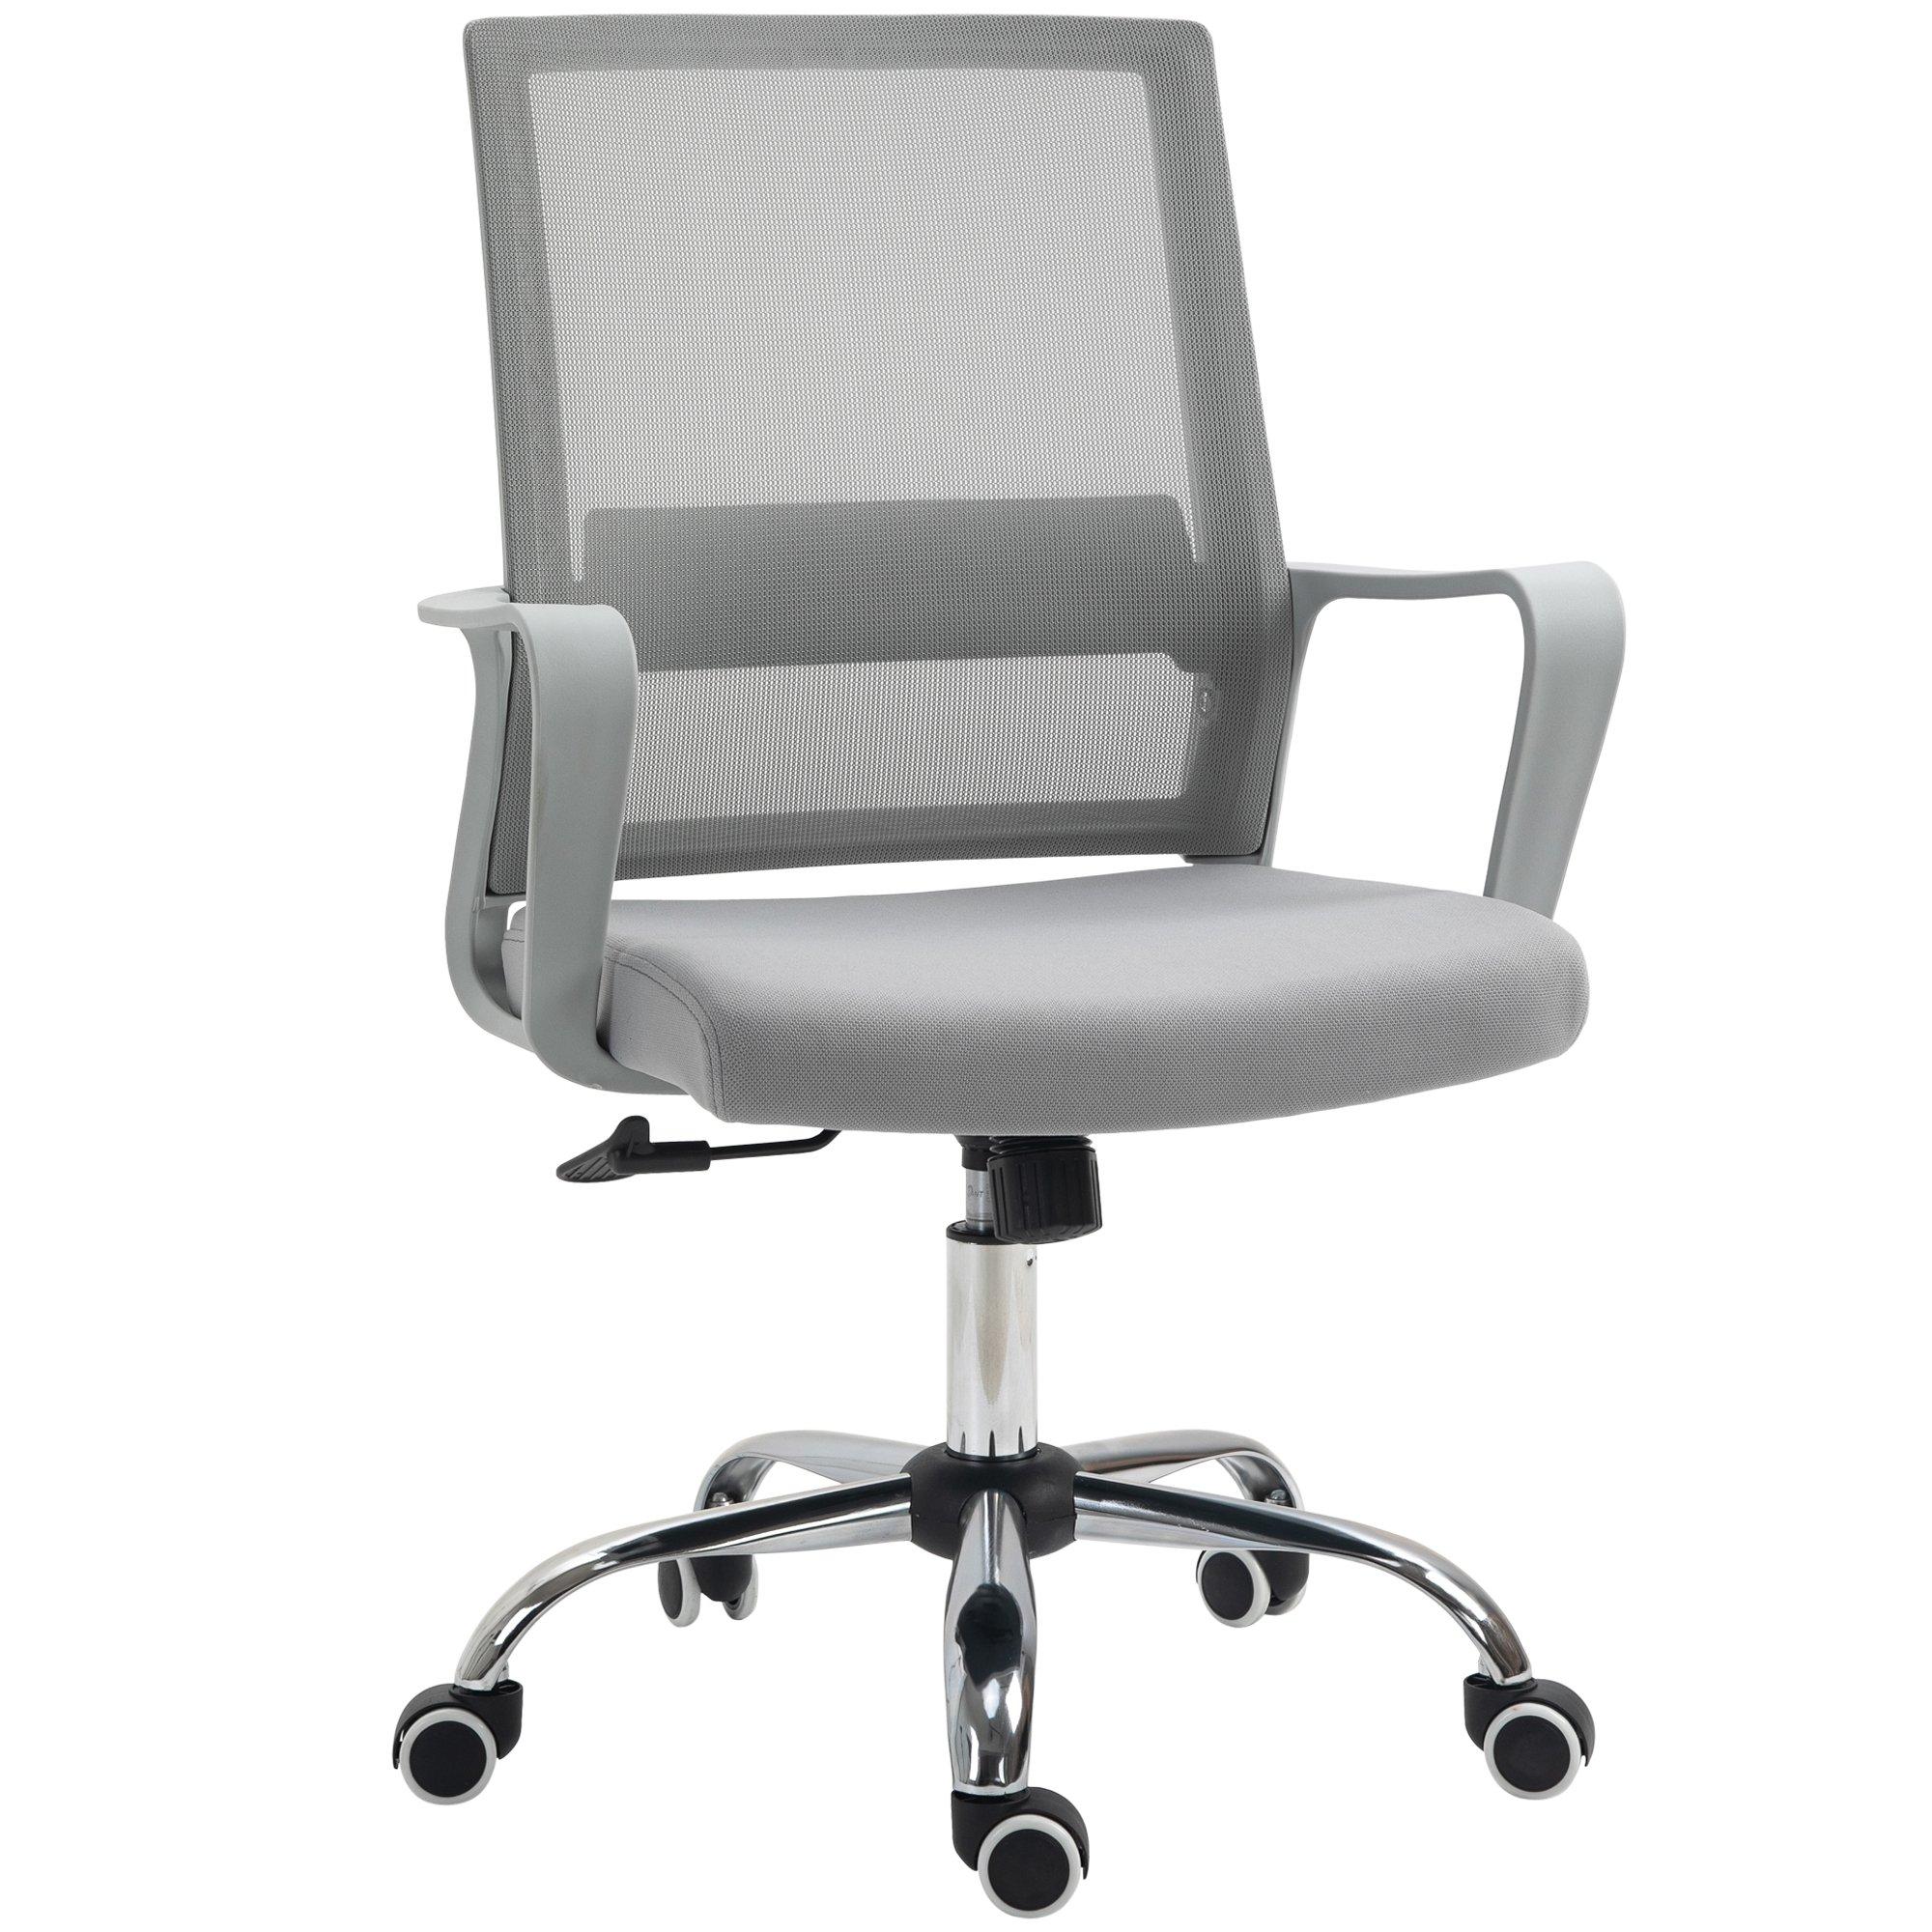 Ergonomic Office Chair Adjustable Height Mesh with Swivel Wheels